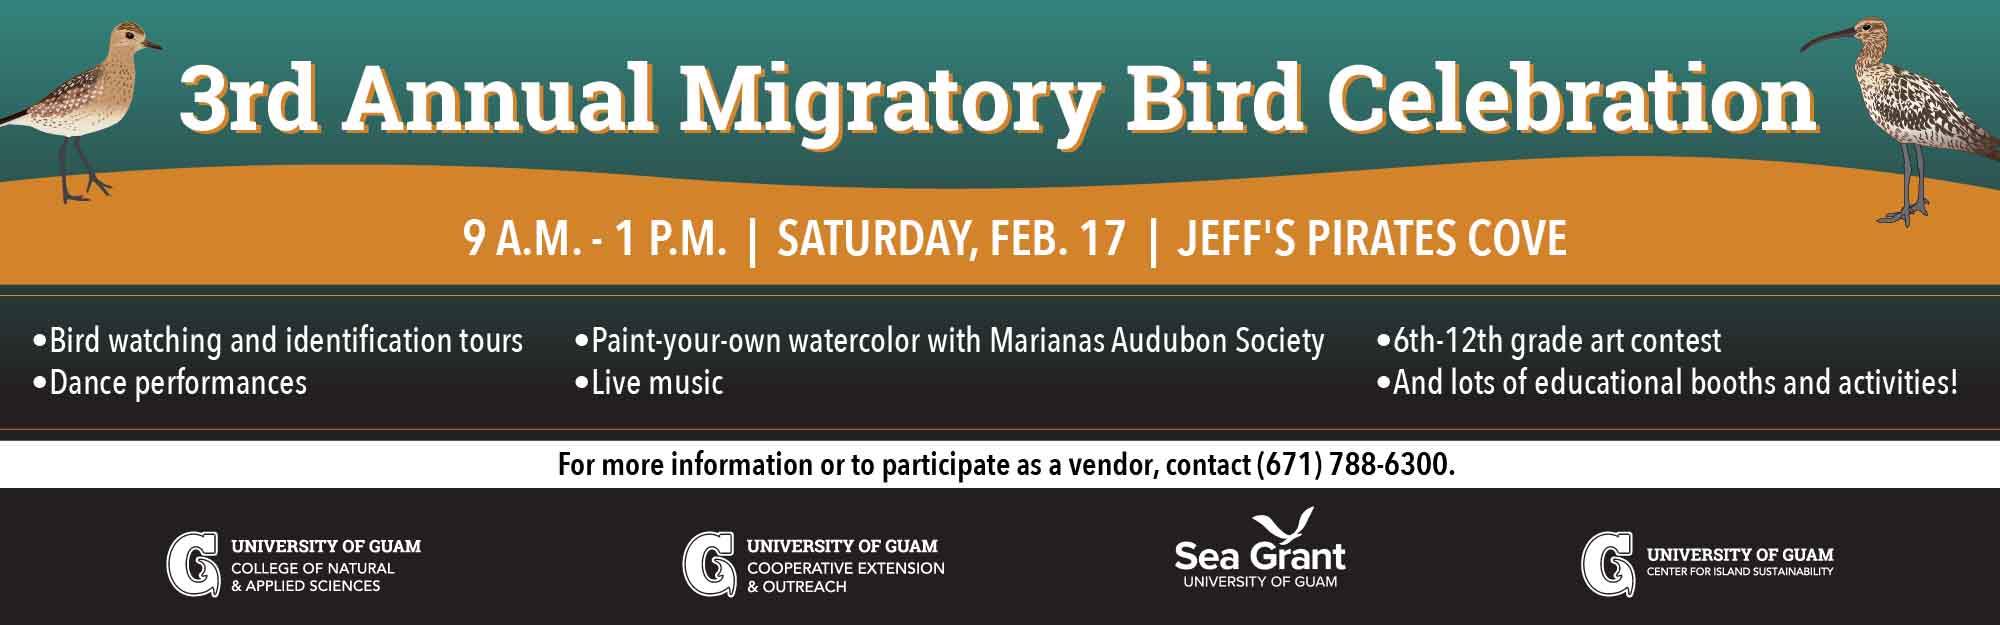 Migratory Bird Celebration banner